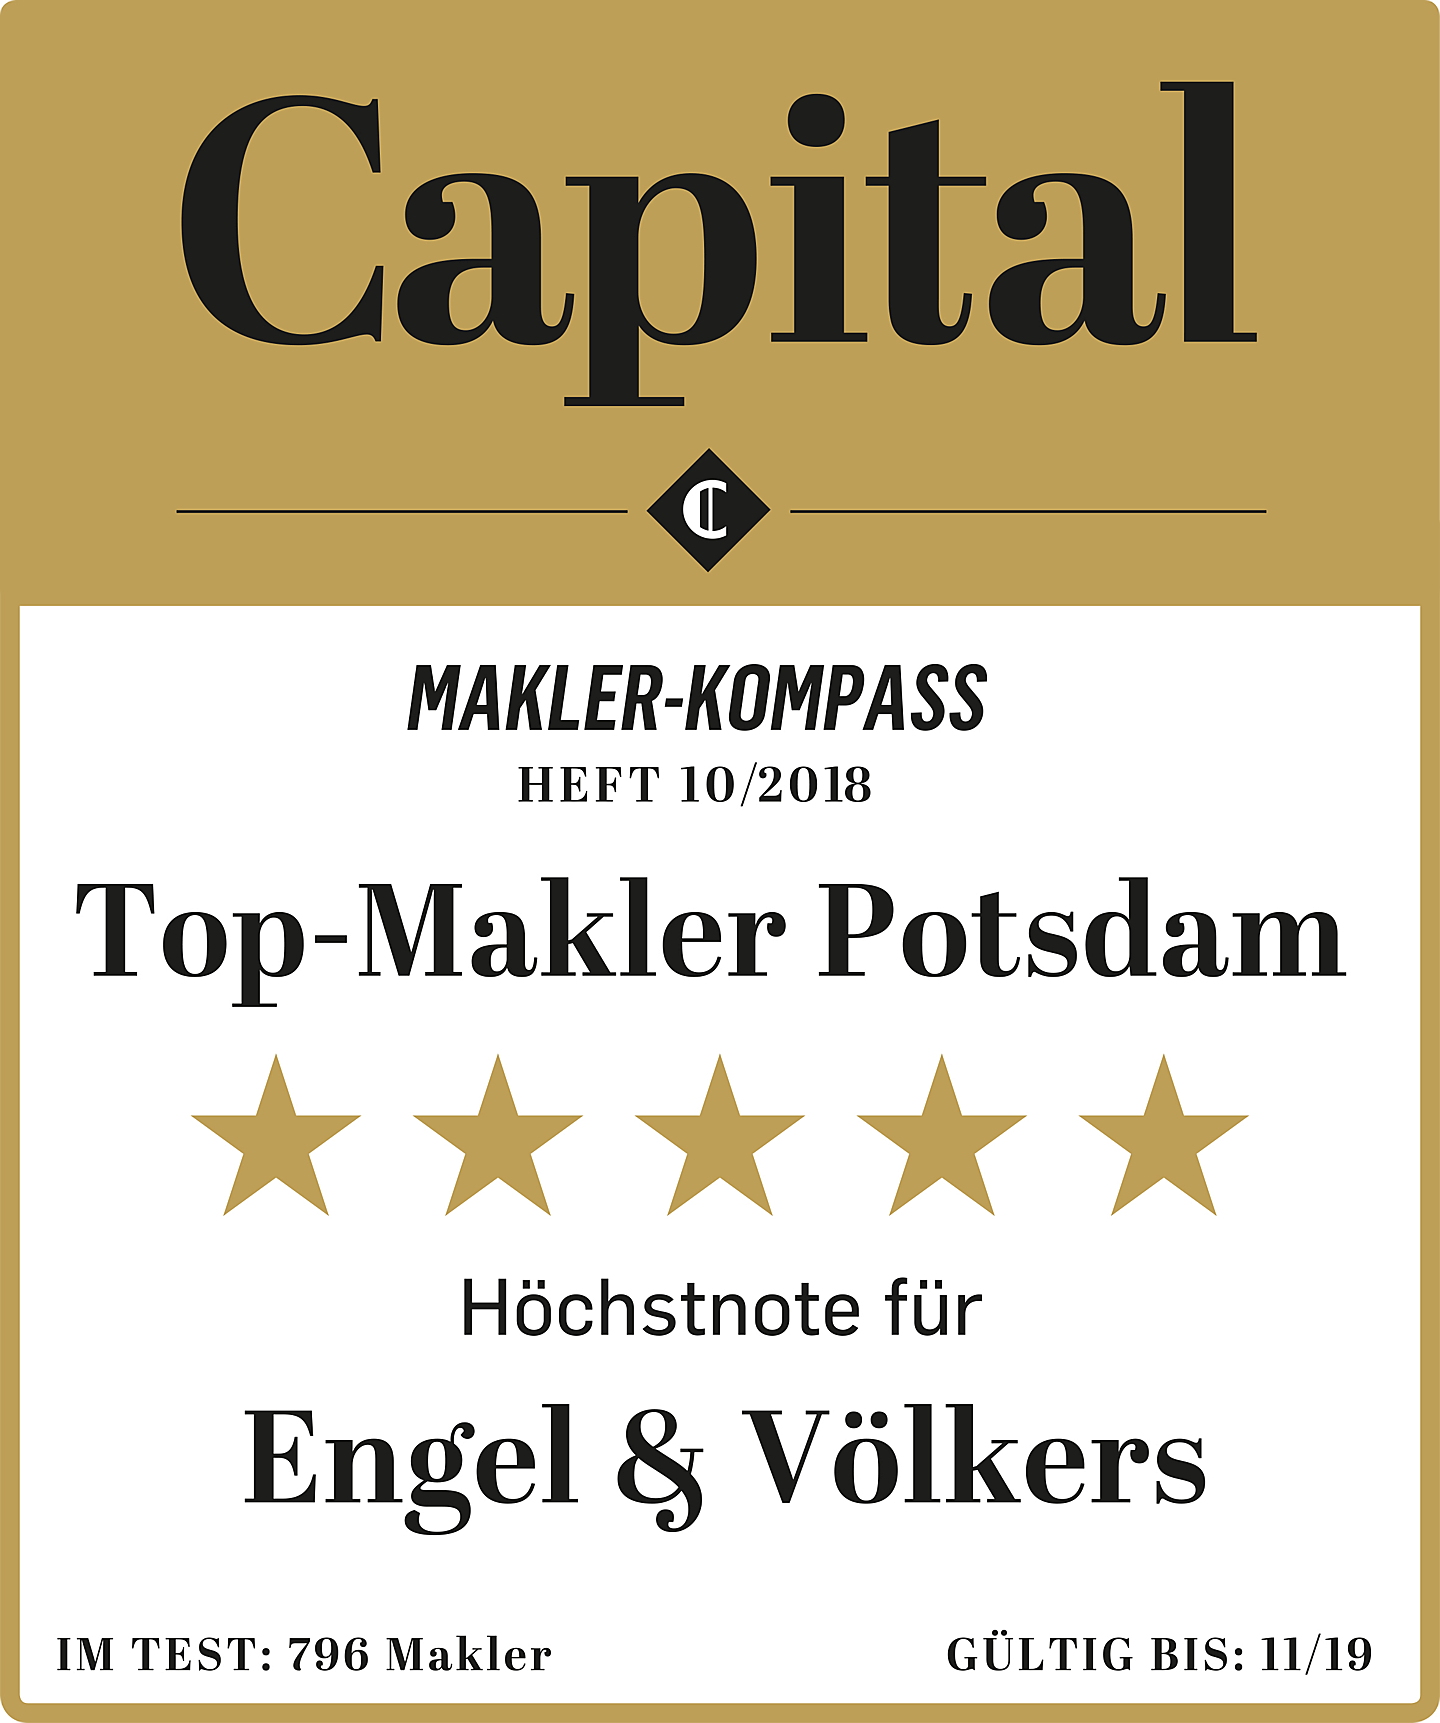  Potsdam
- CAP_1018_Makler-Kompass_5 Sterne.jpg